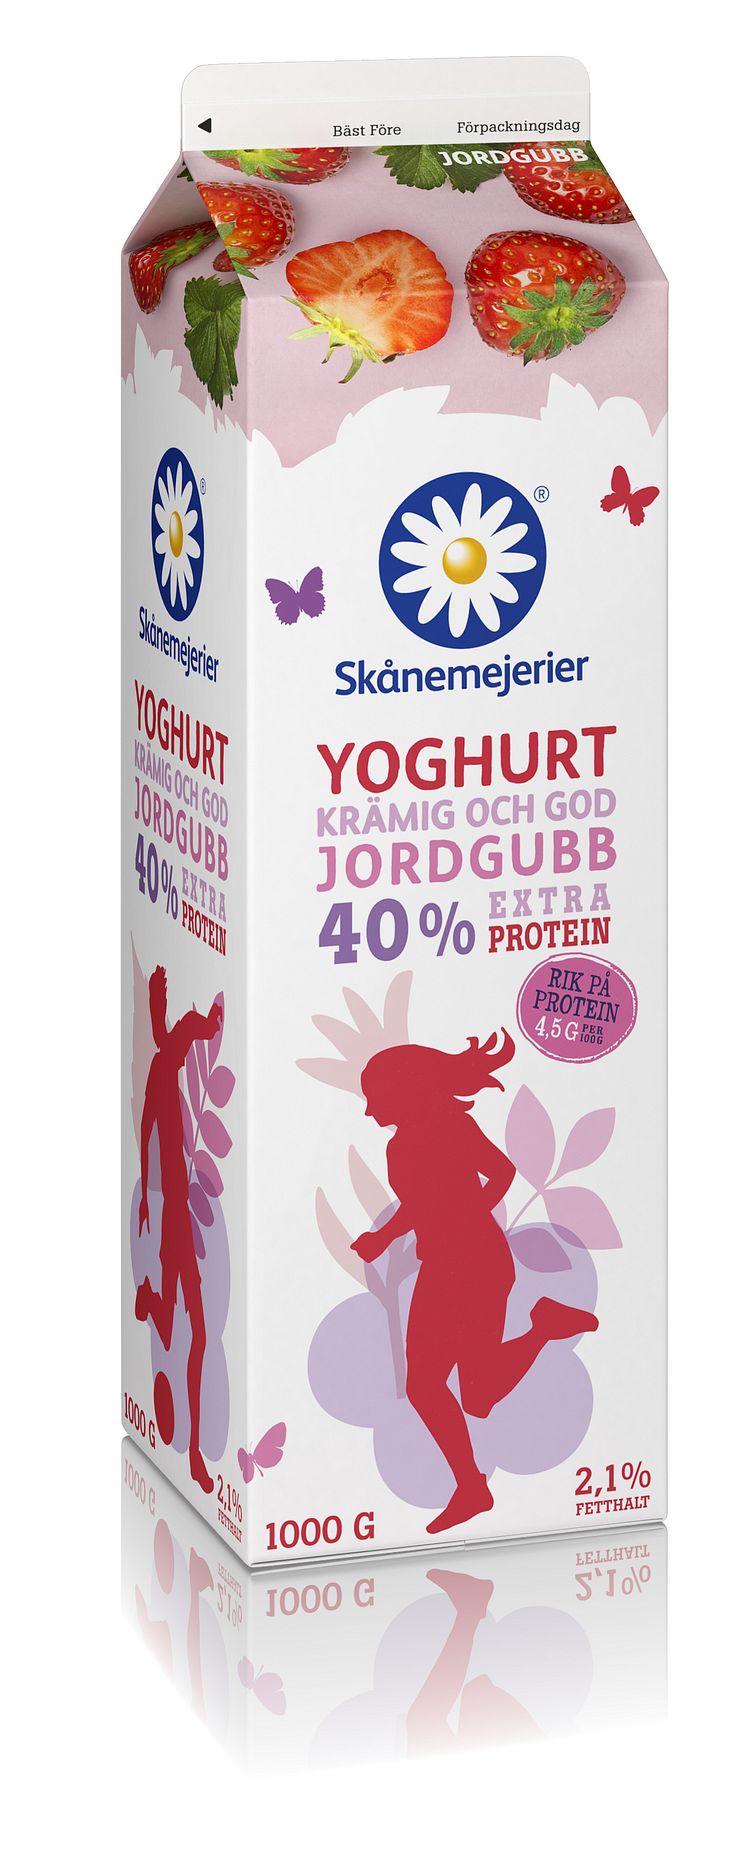 Yoghurt med extra protein jordgubb